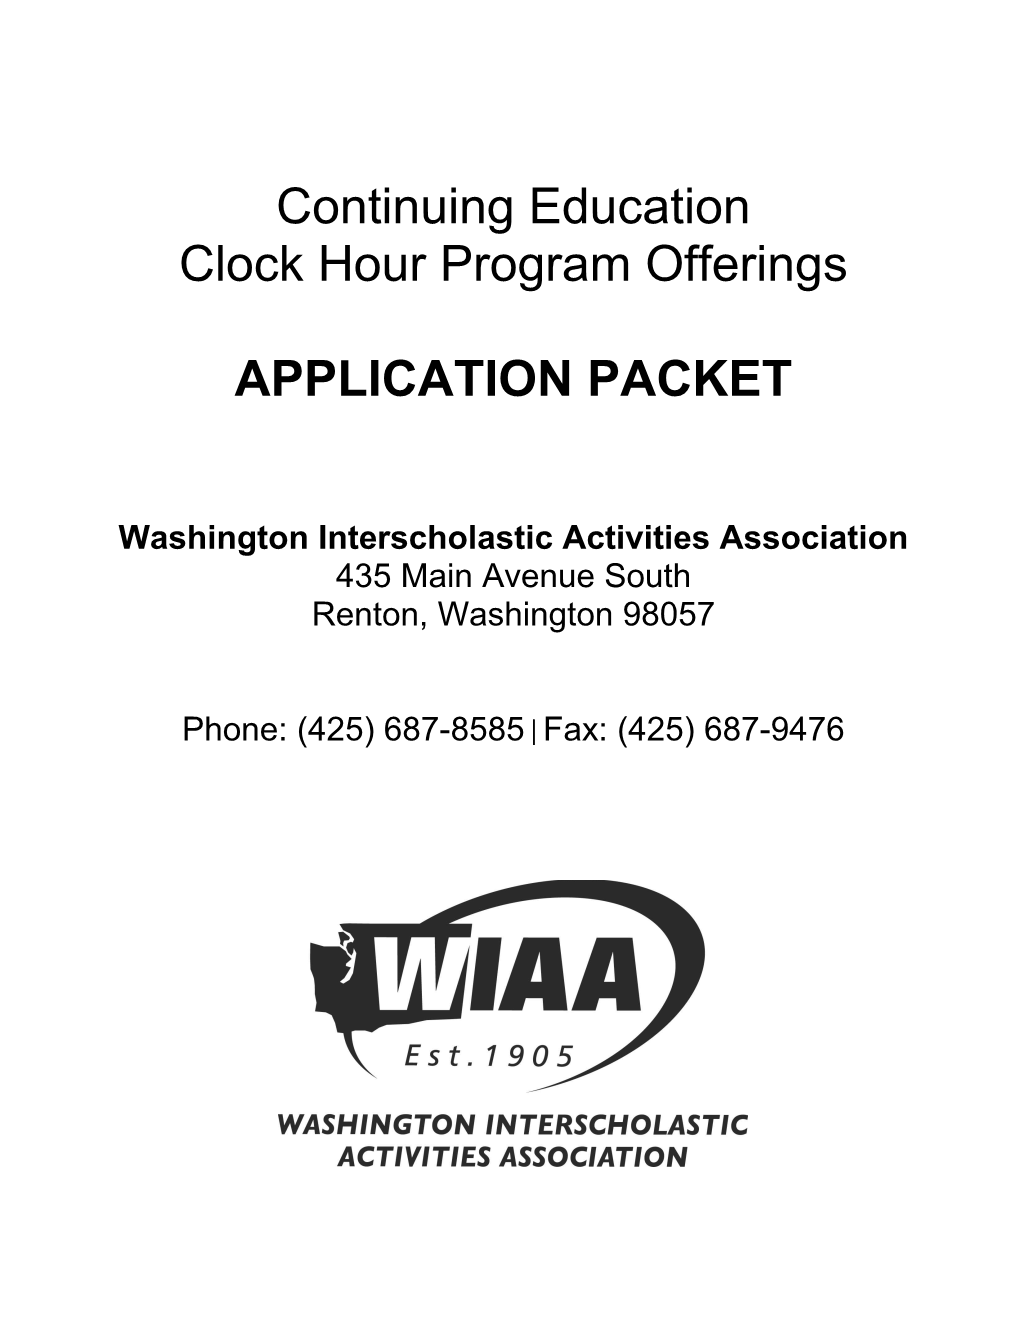 Washington Interscholastic Activities Association